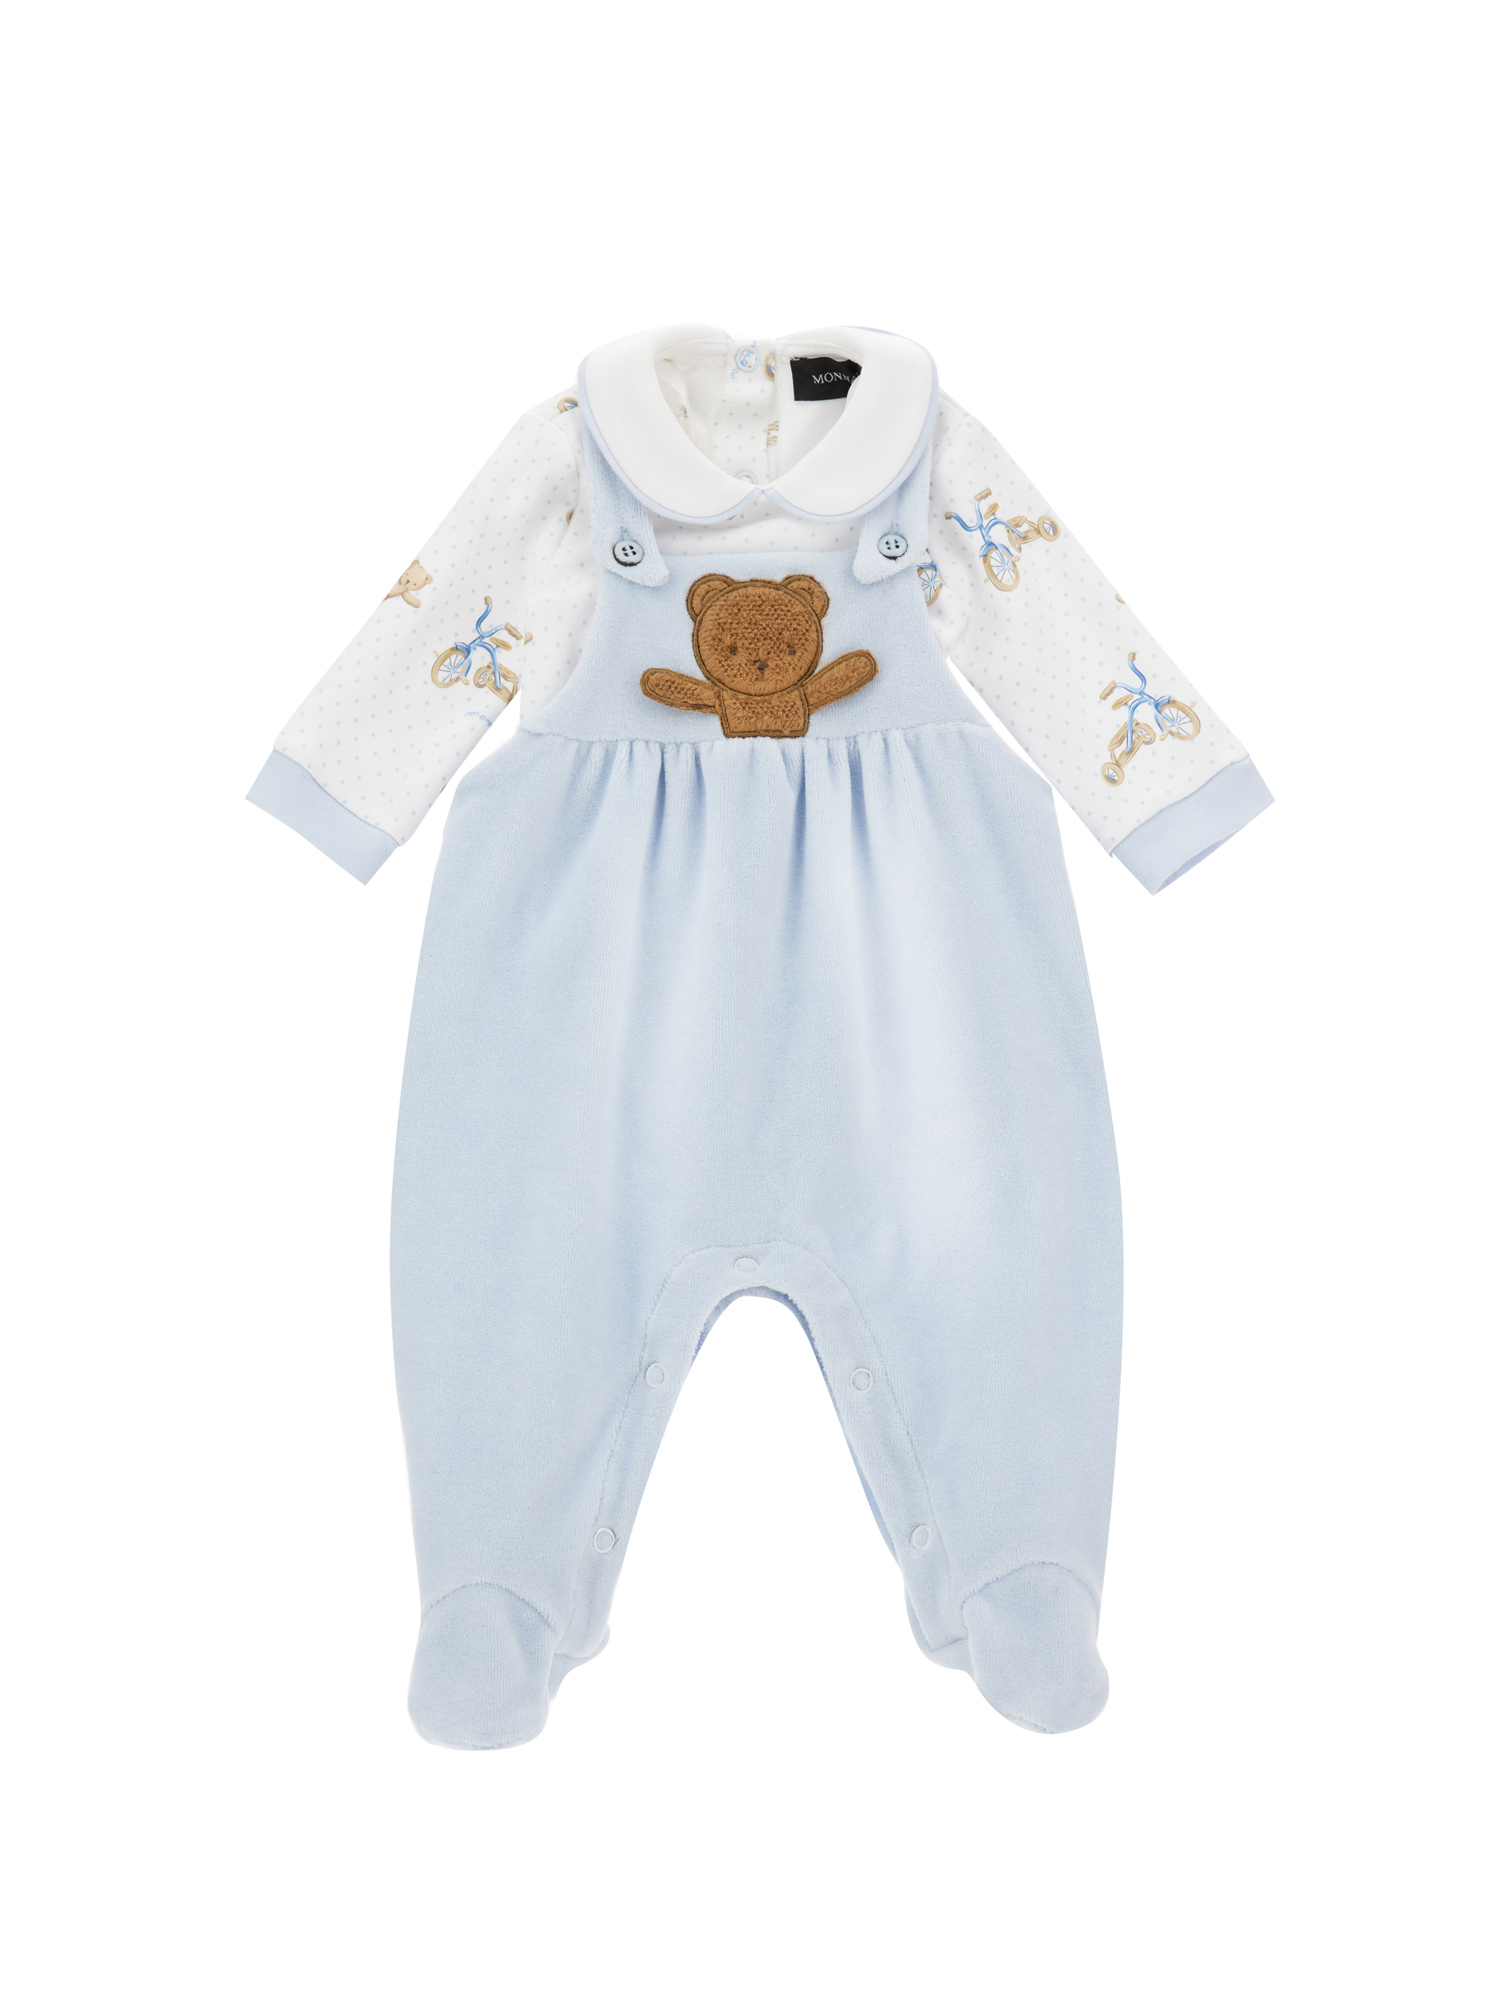 Monnalisa Babies'   Newborn Two-piece Set In Cream White + Sky Blue